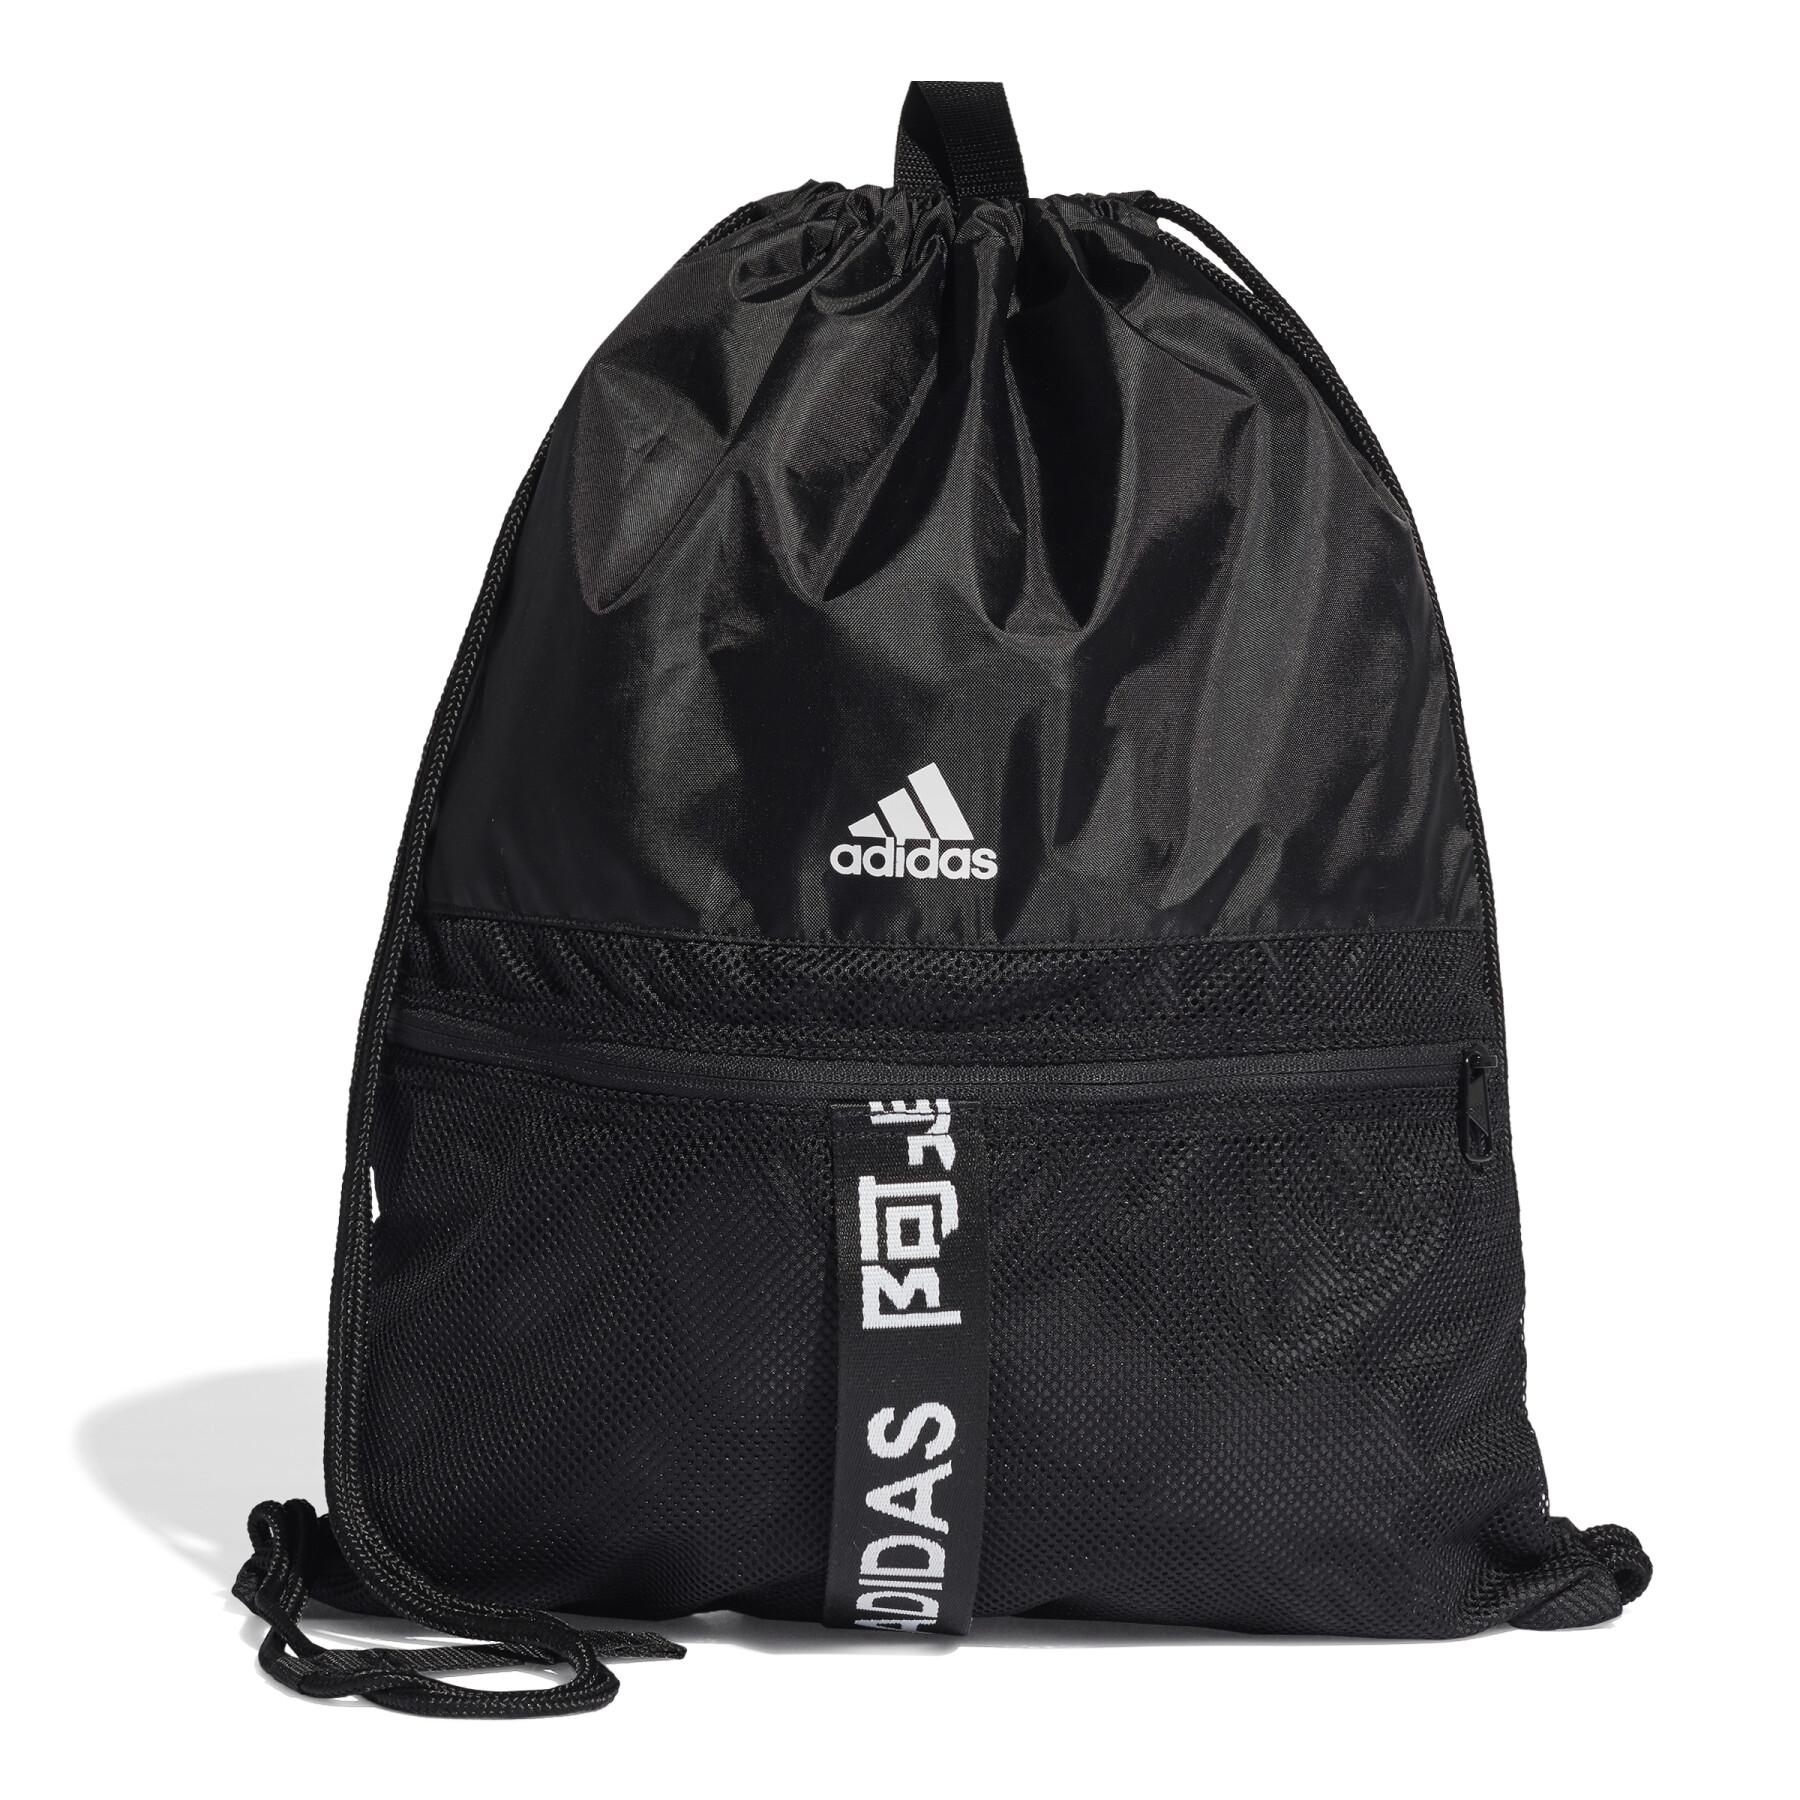 Gym bag adidas 4Athlts Gym